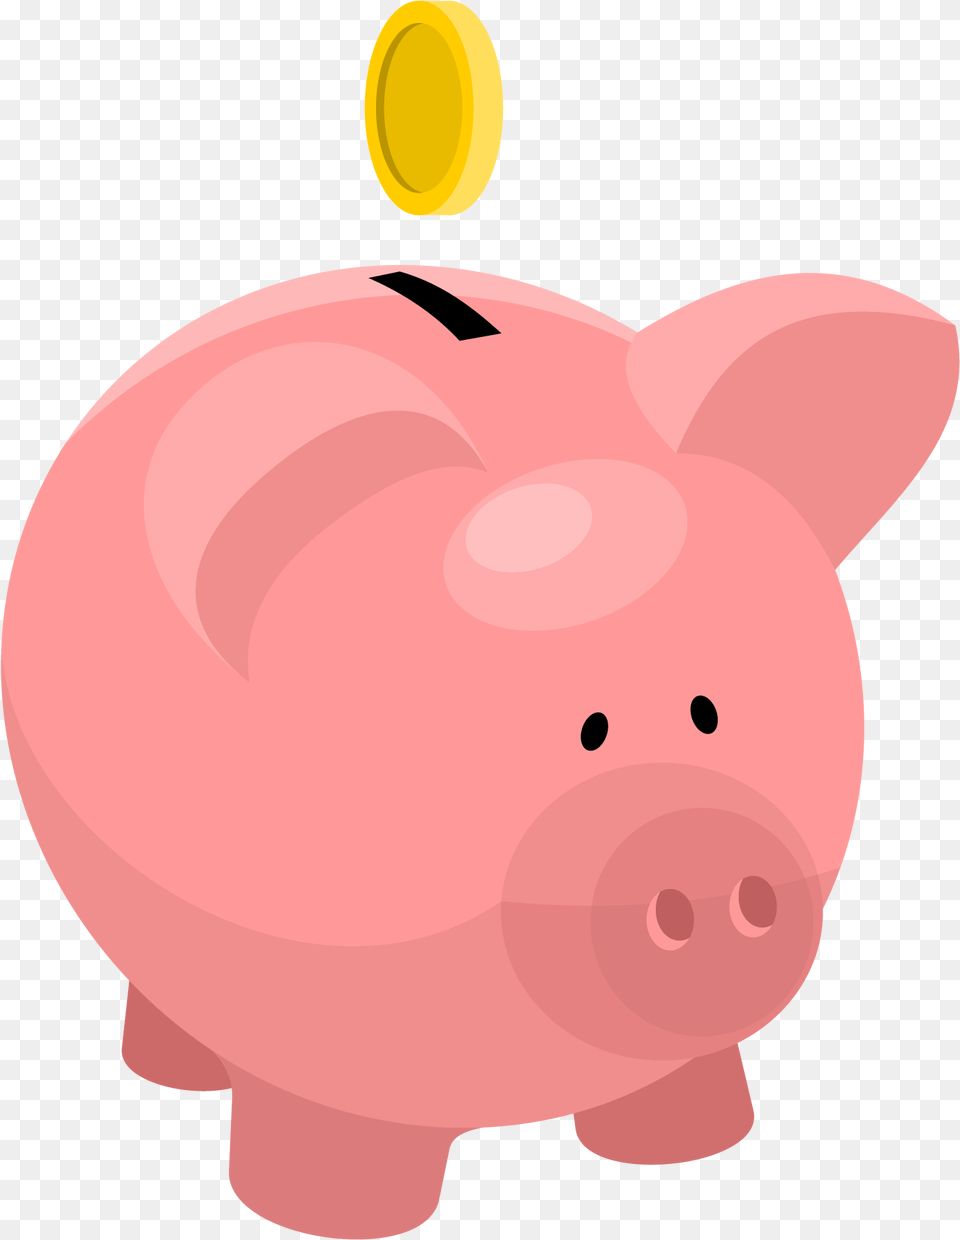 Download Piggy Bank Piggy Bank Background, Piggy Bank Free Transparent Png